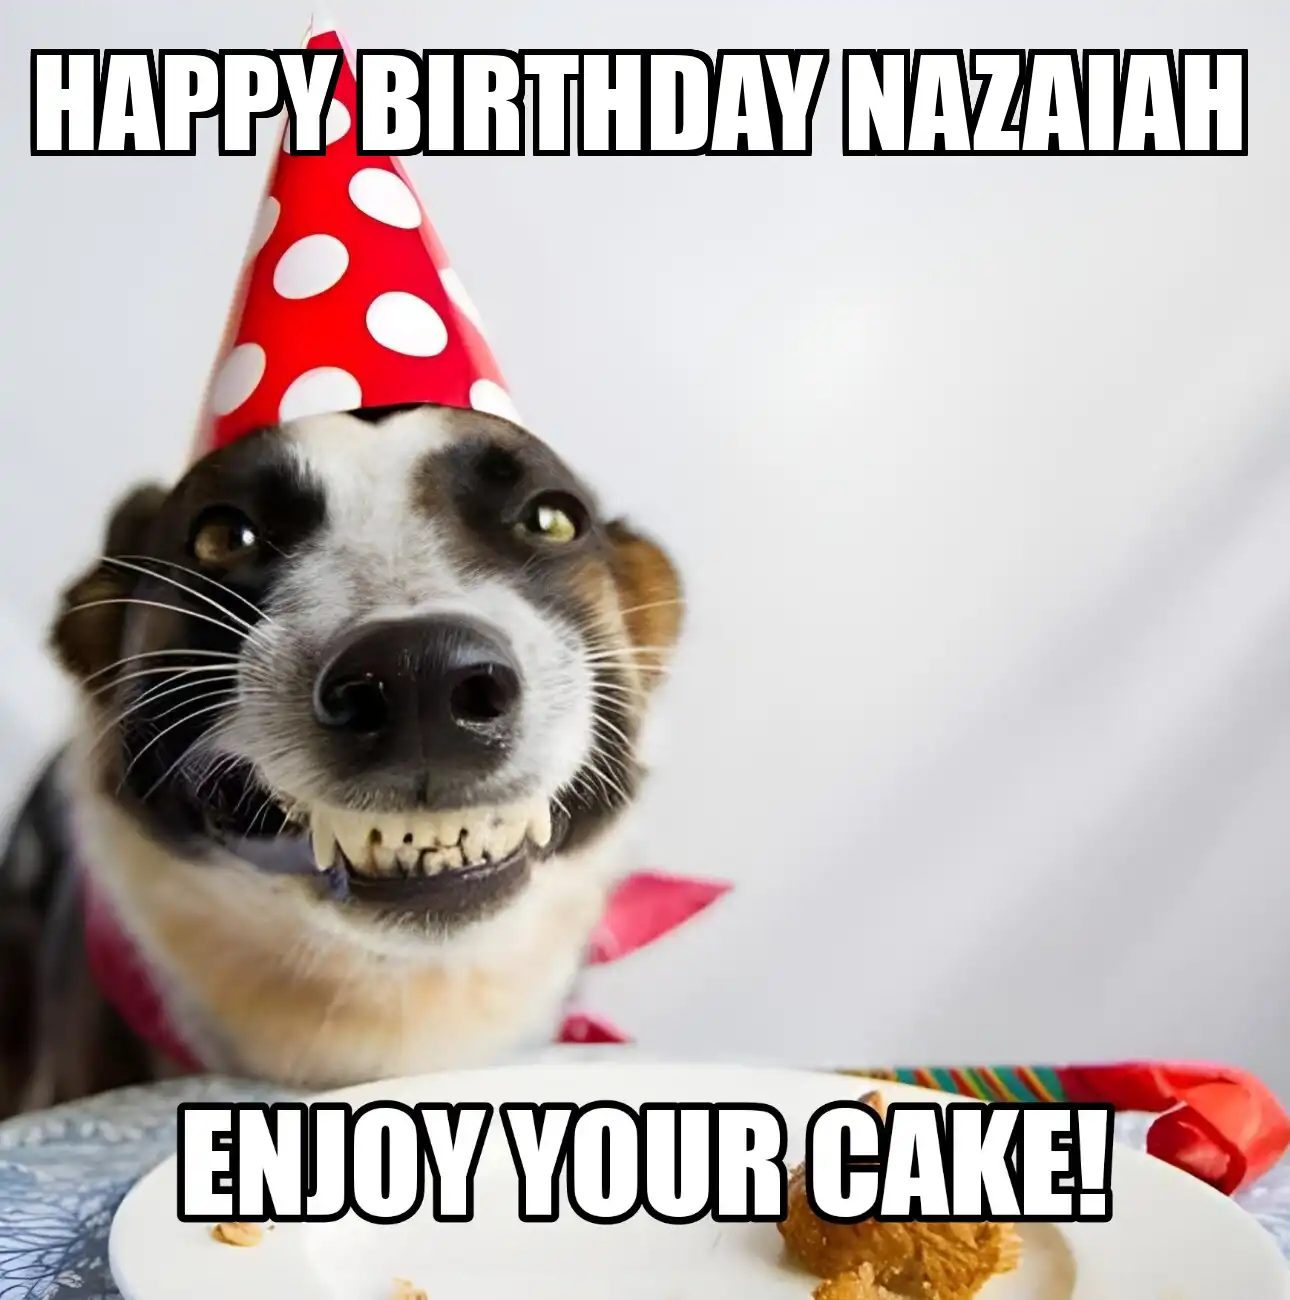 Happy Birthday Nazaiah Enjoy Your Cake Dog Meme